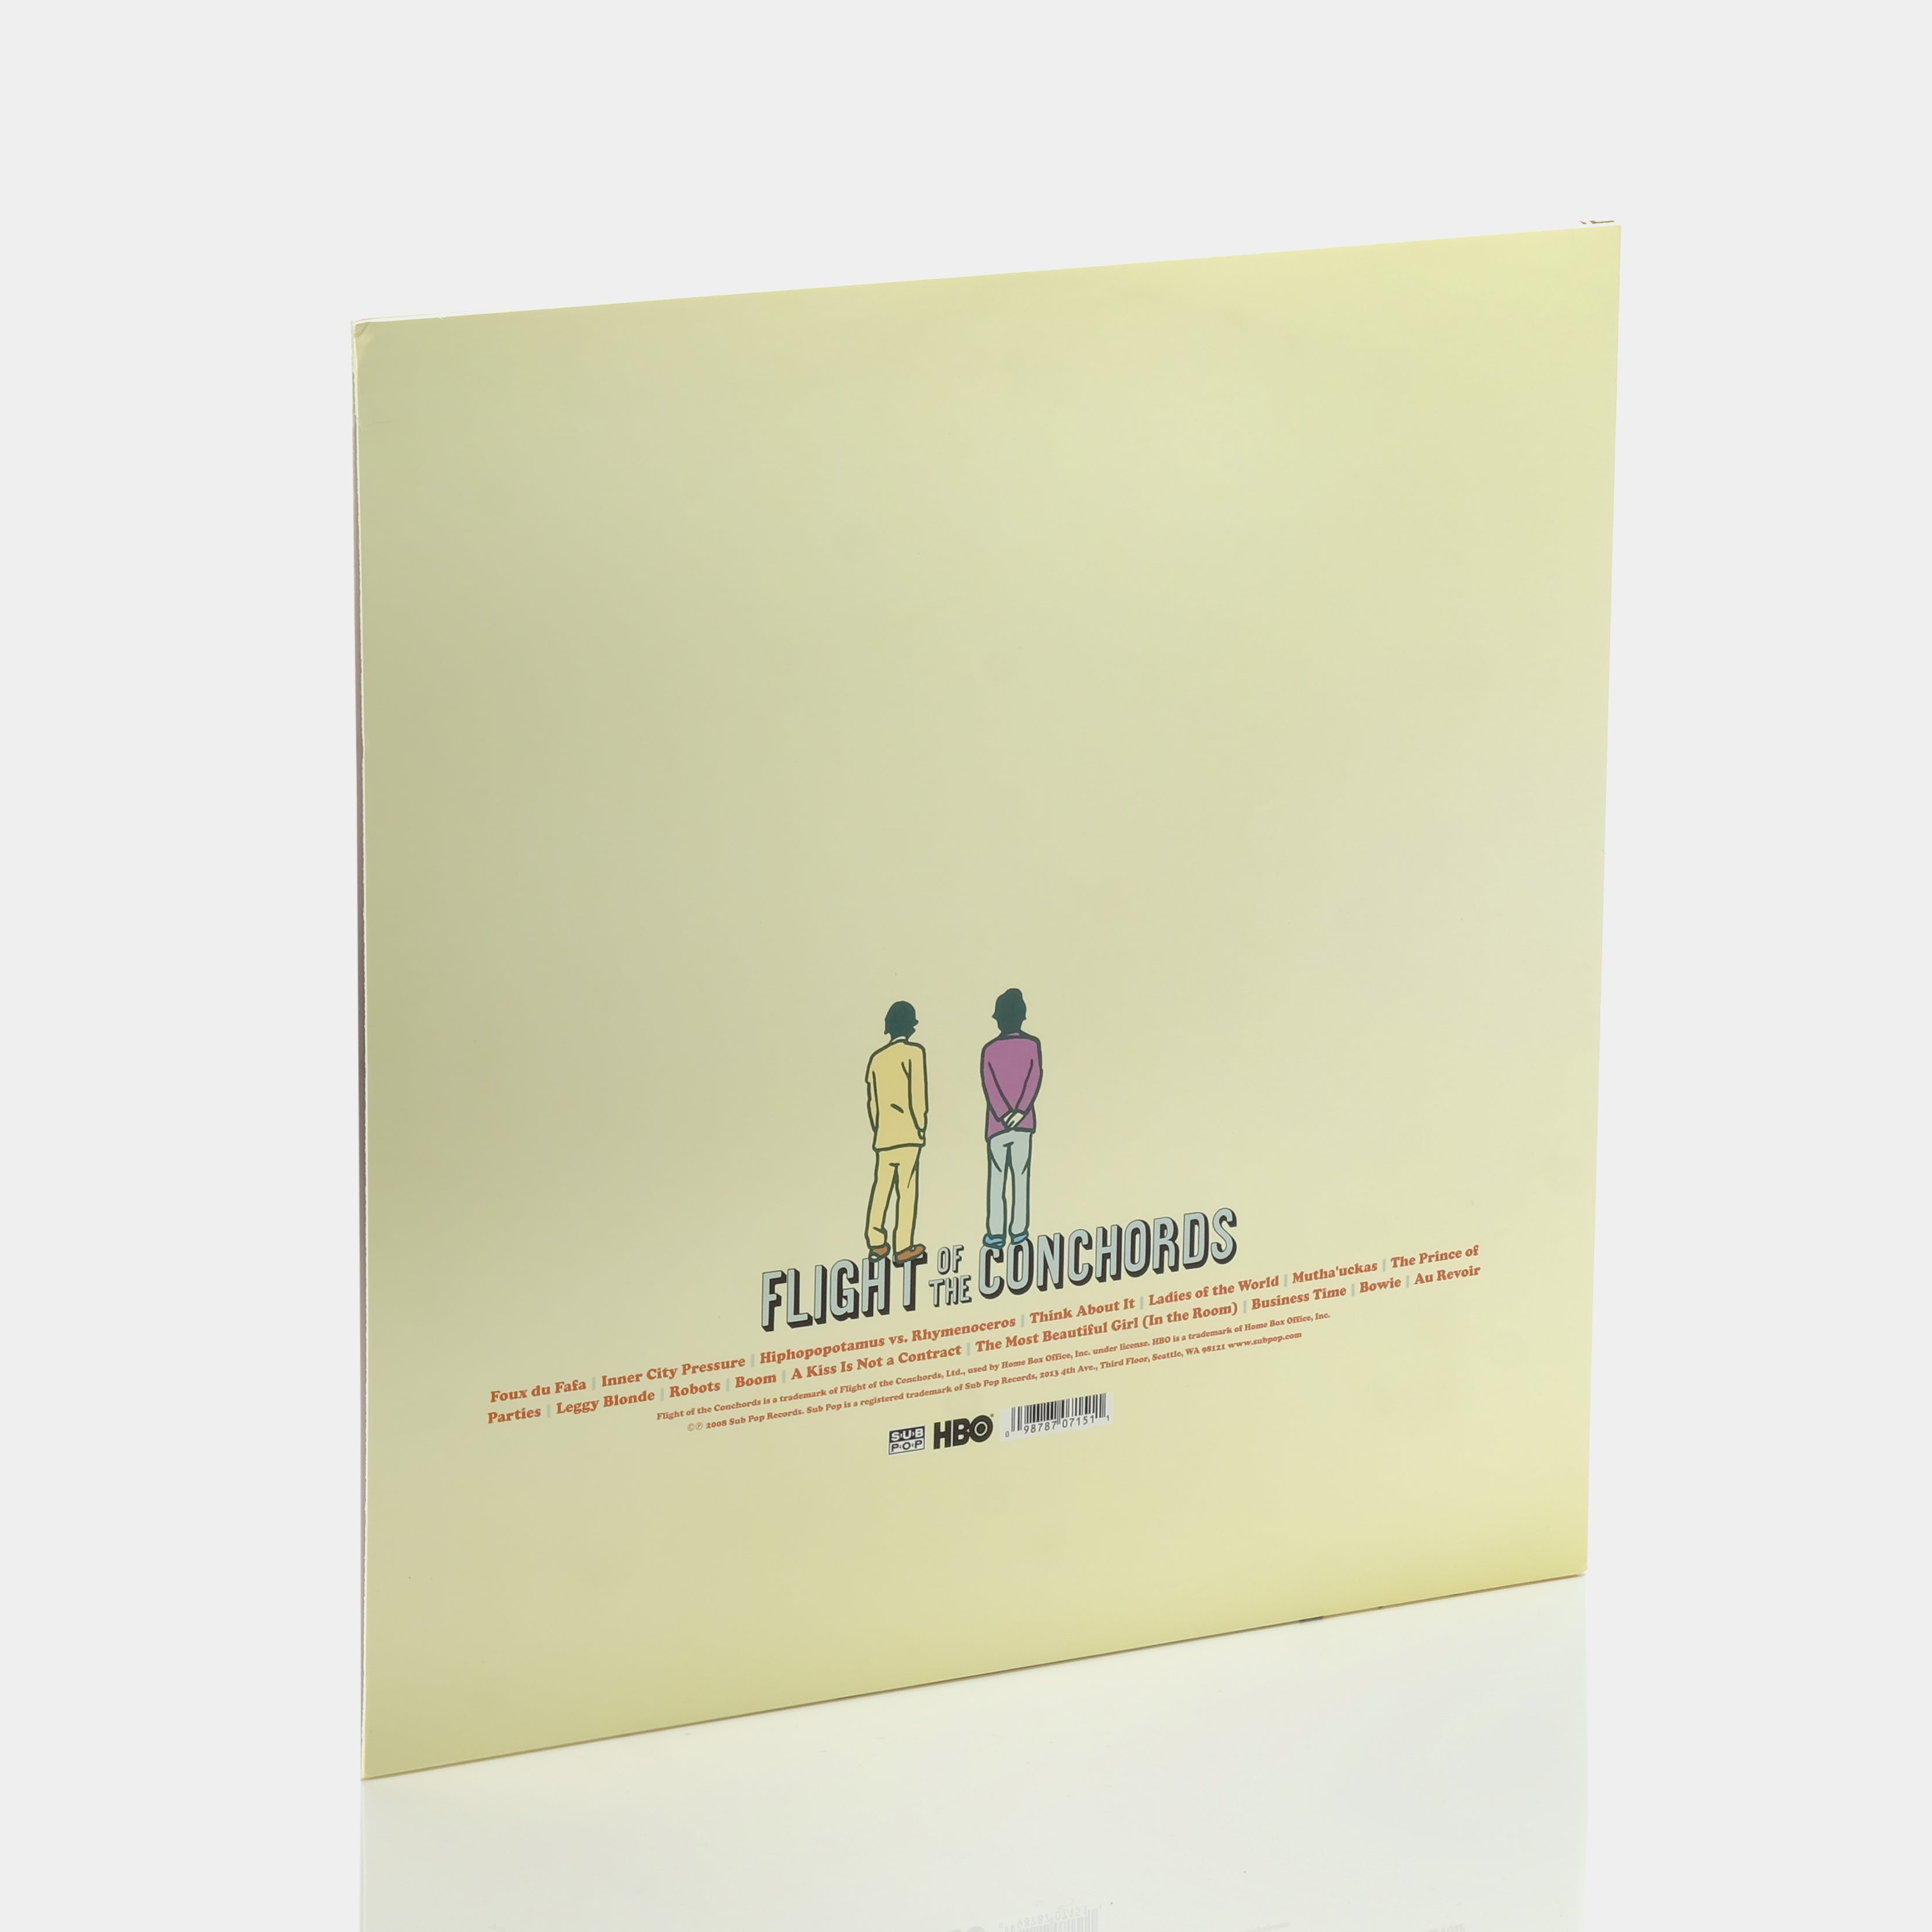 Flight Of The Conchords - Flight Of The Conchords LP Vinyl Record